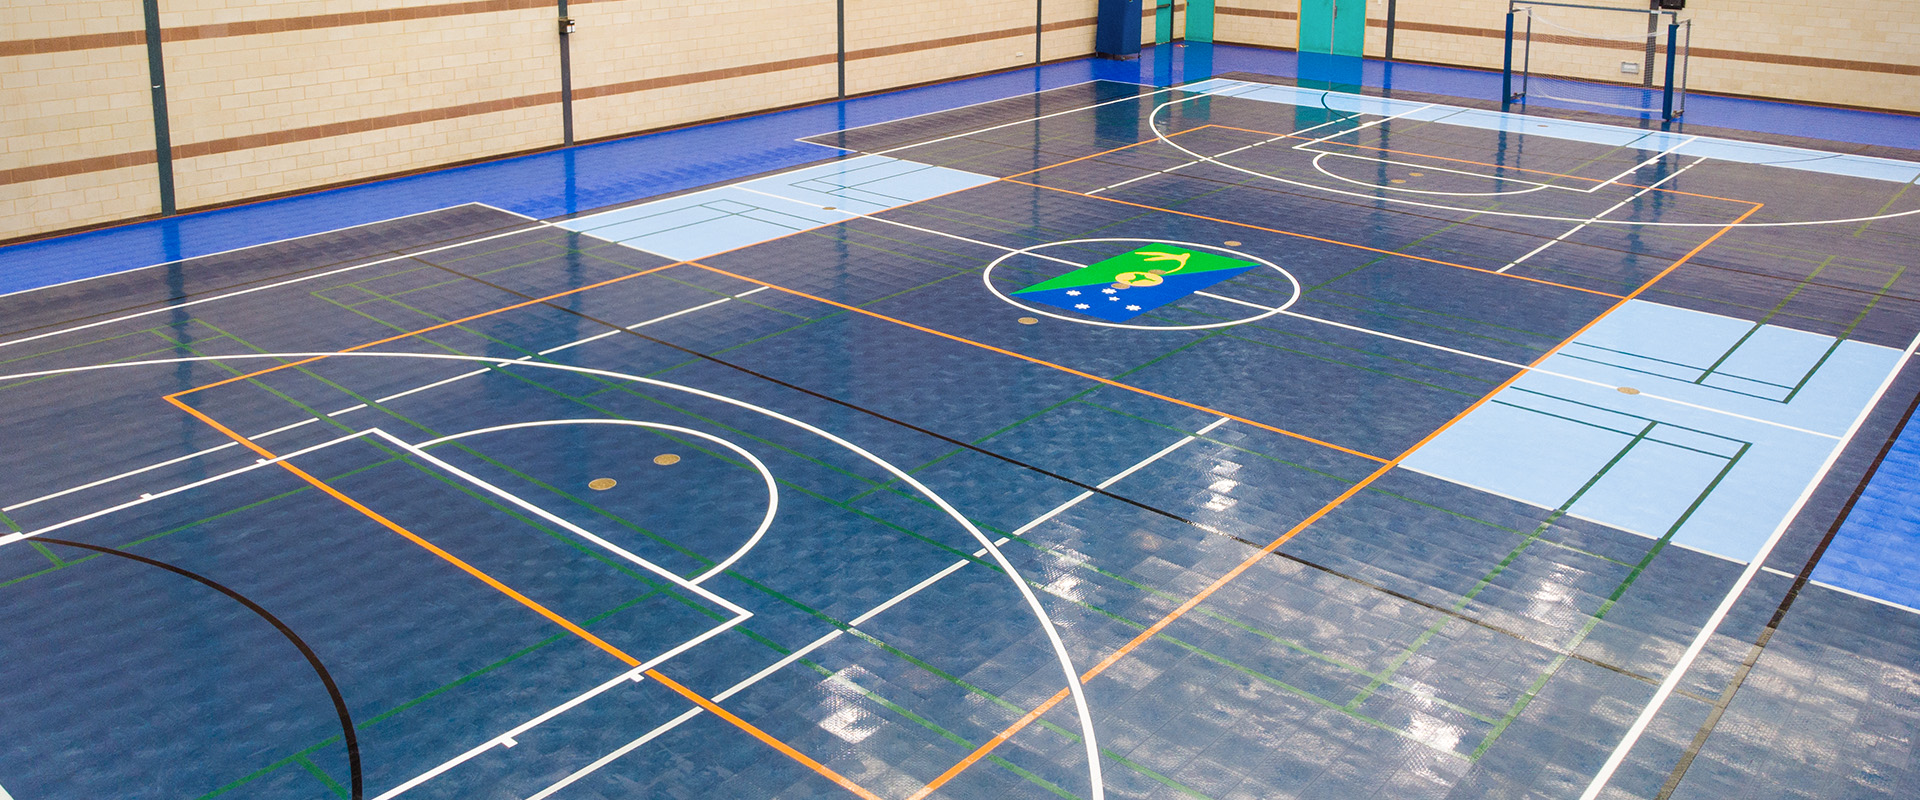 Indoor Court Flooring  Revolution - SnapSports